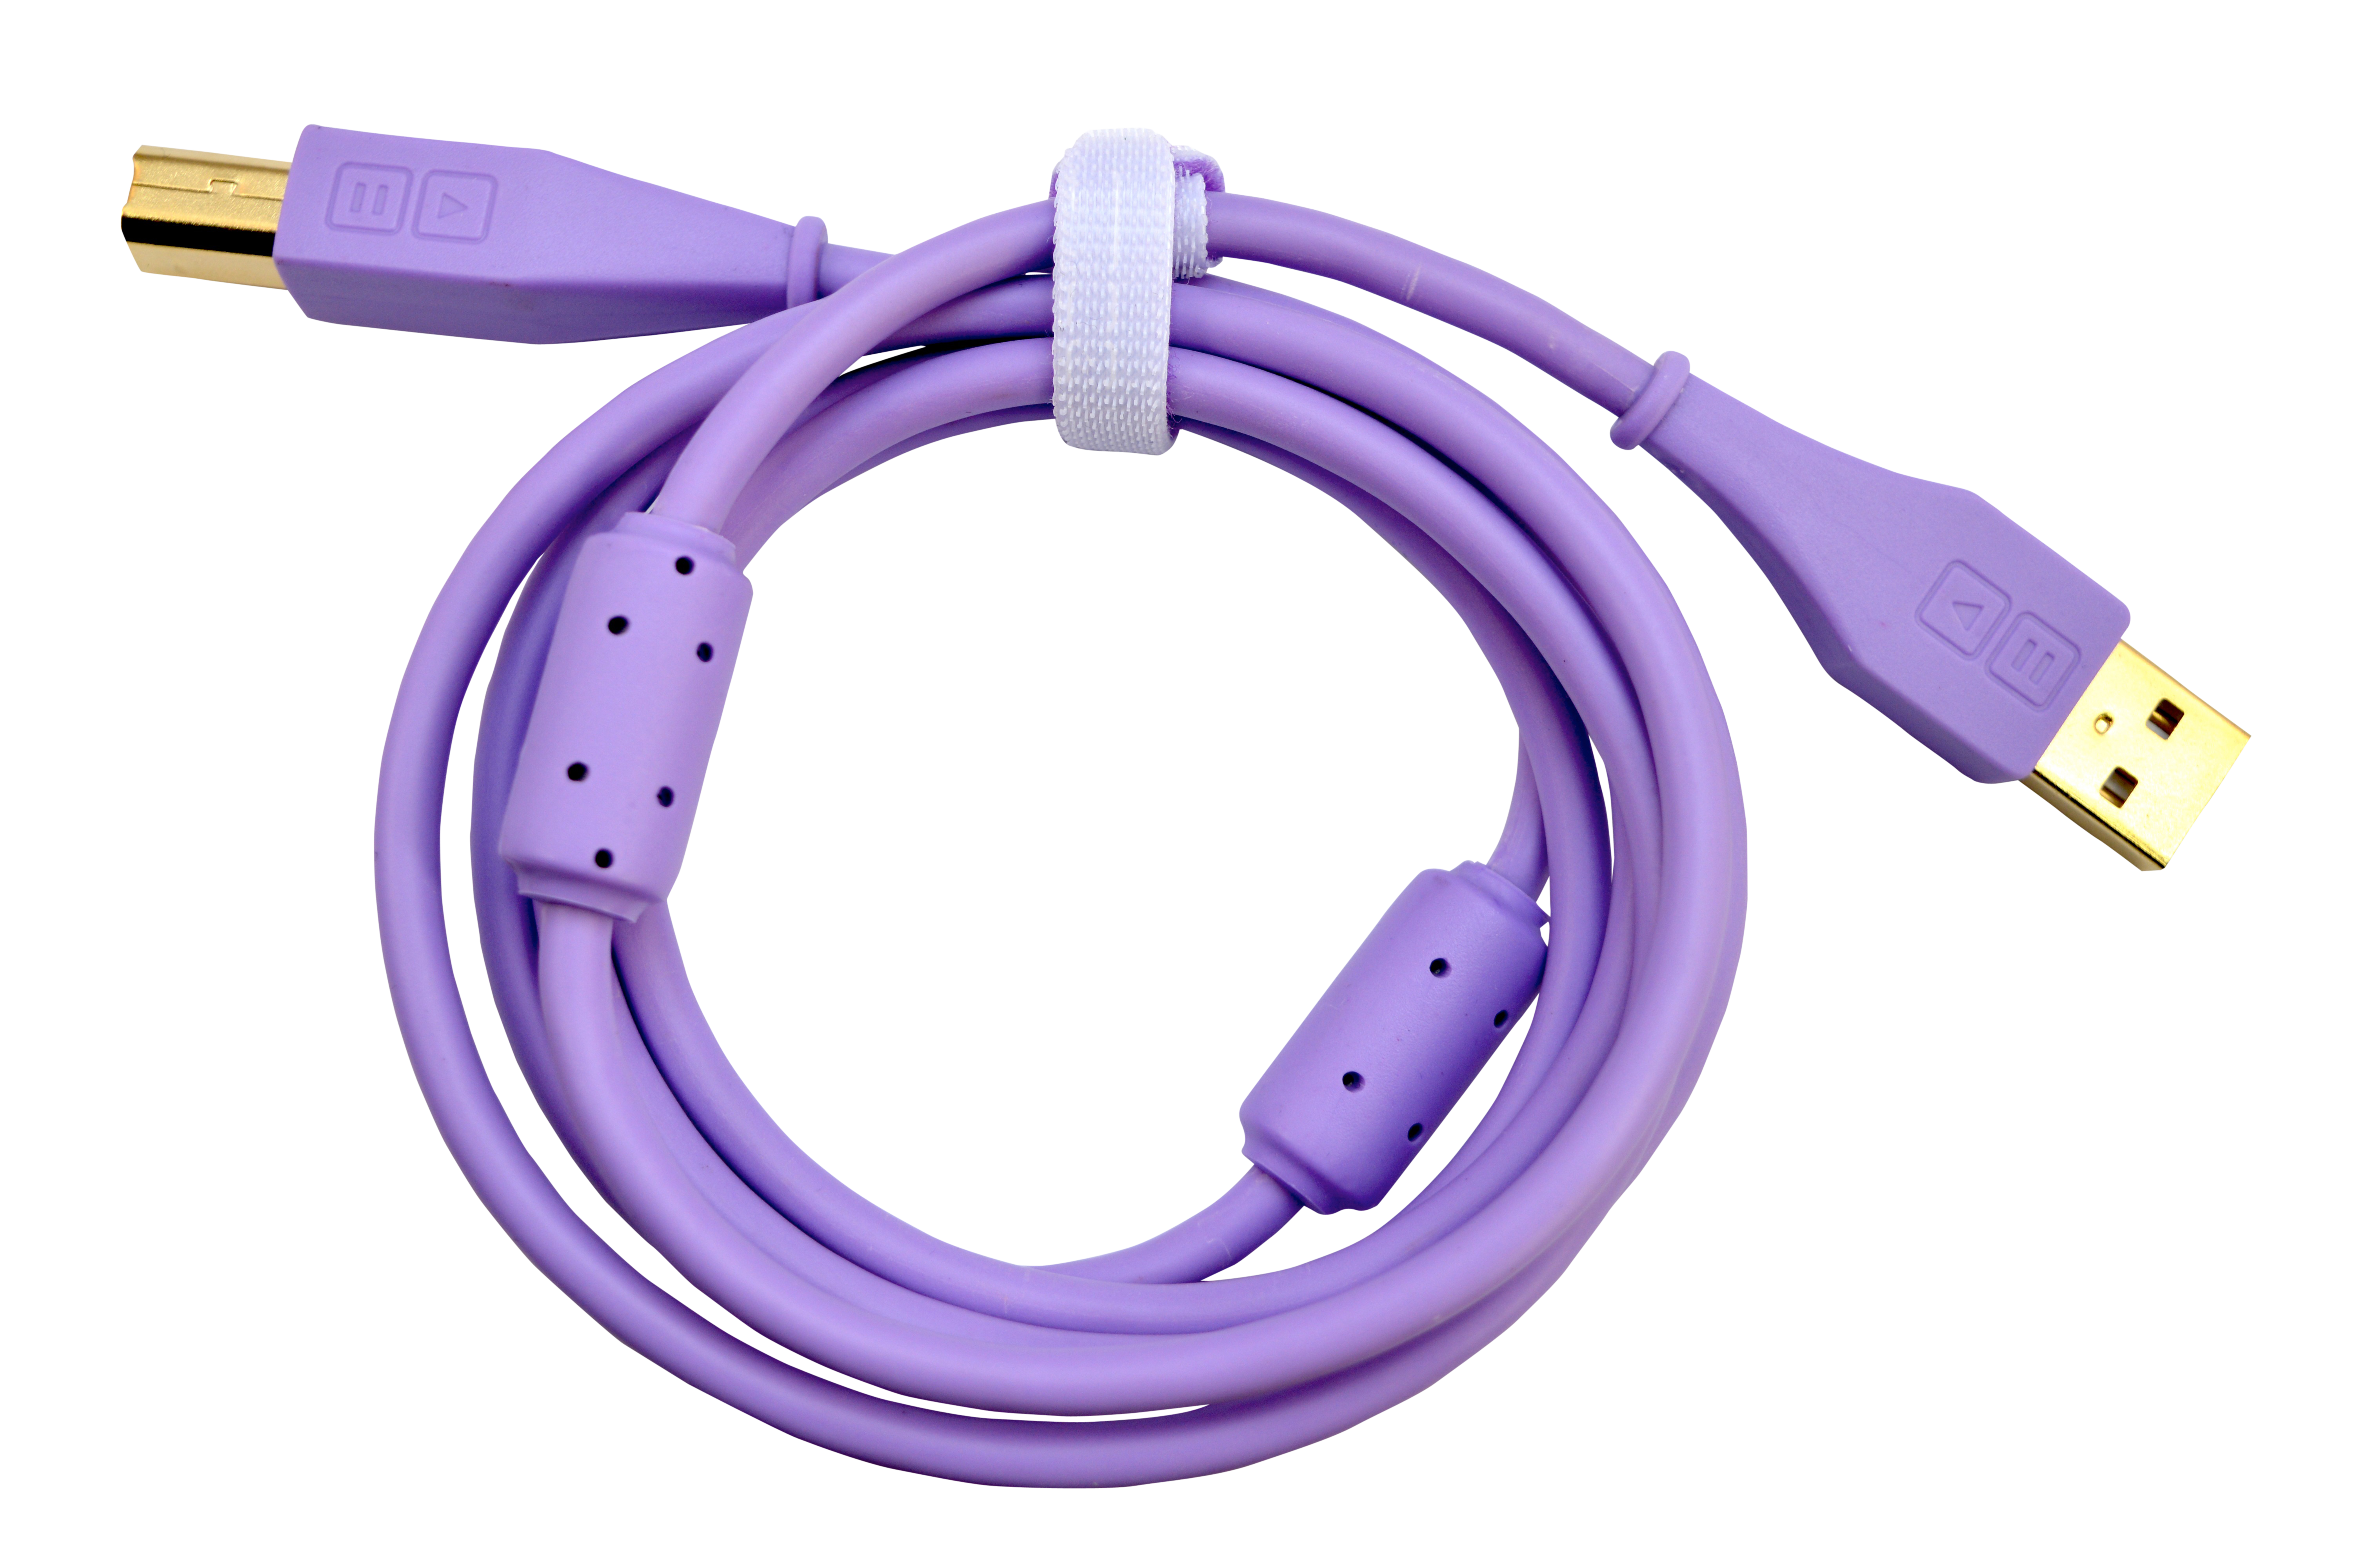 DJ TechTools Chroma Cable straight Purple